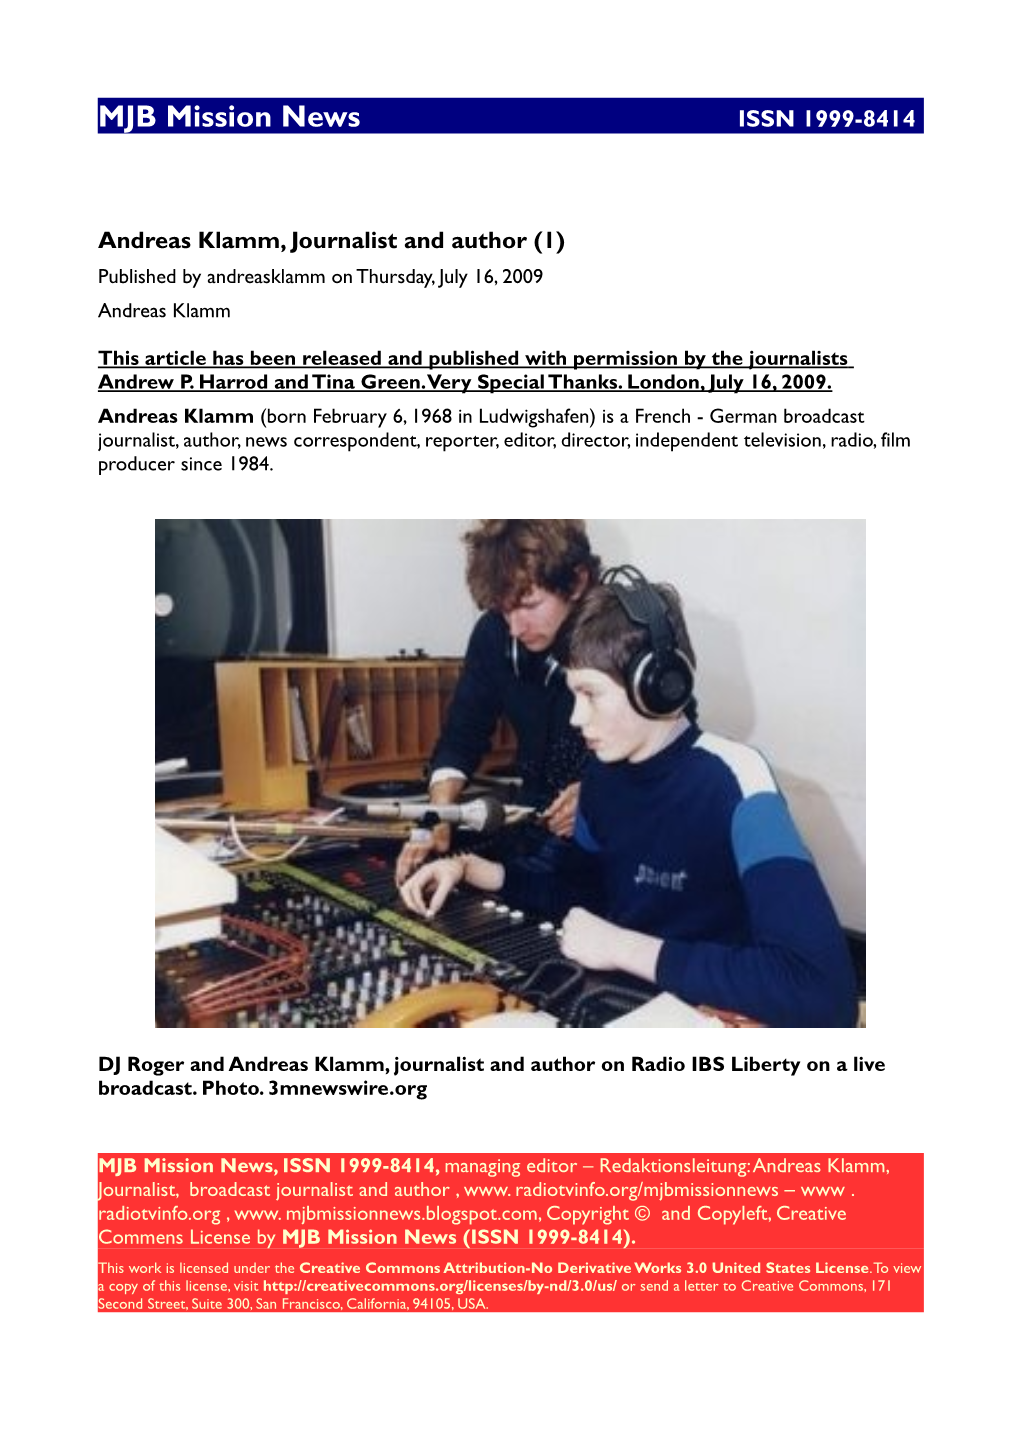 MJB Mission News, ISSN 1999-8414, Managing Editor – Redaktionsleitung: Andreas Klamm, Journalist, Broadcast Journalist and Author , Www